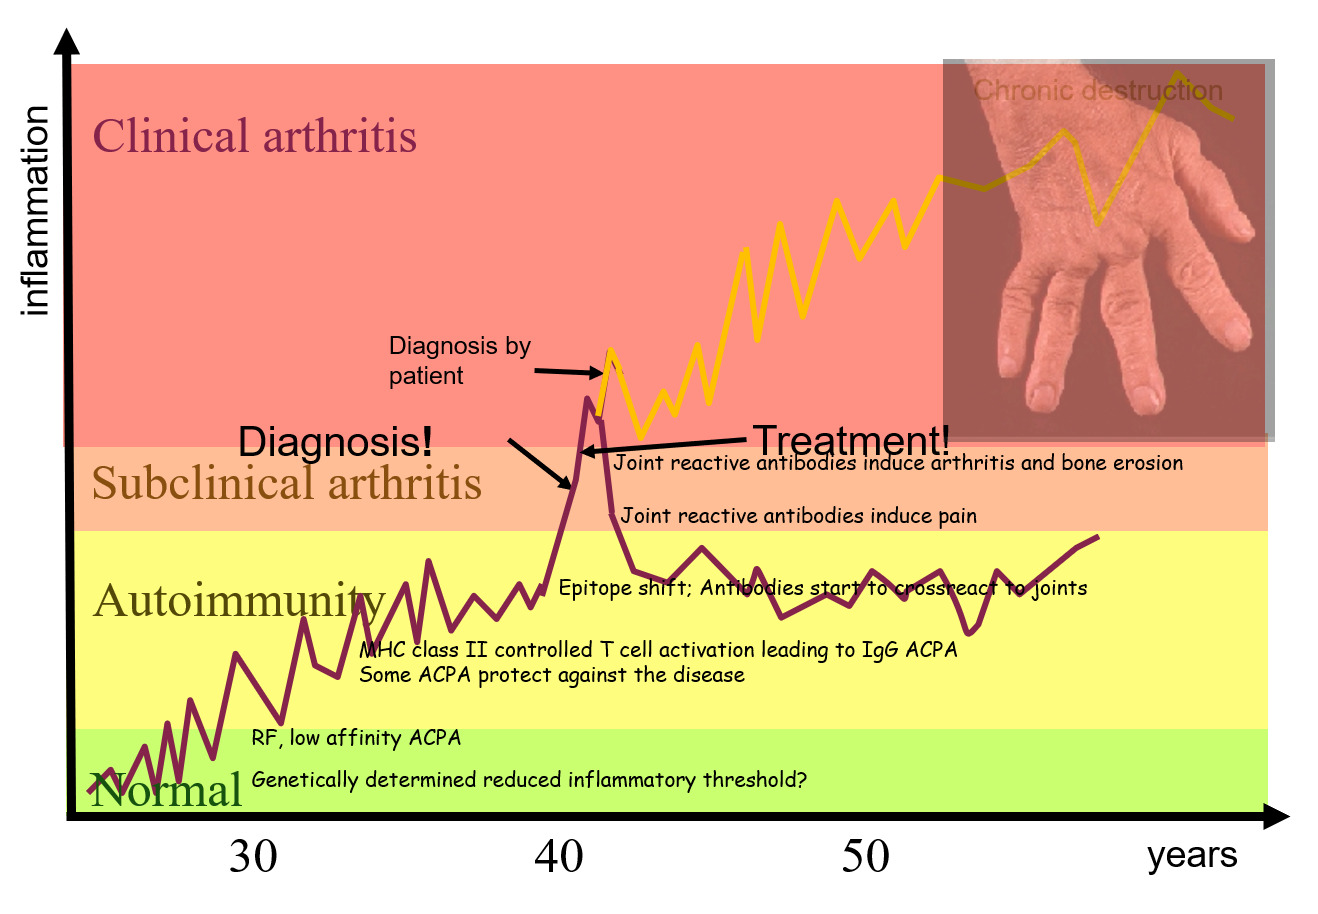 Course of disease for clinical arthritis